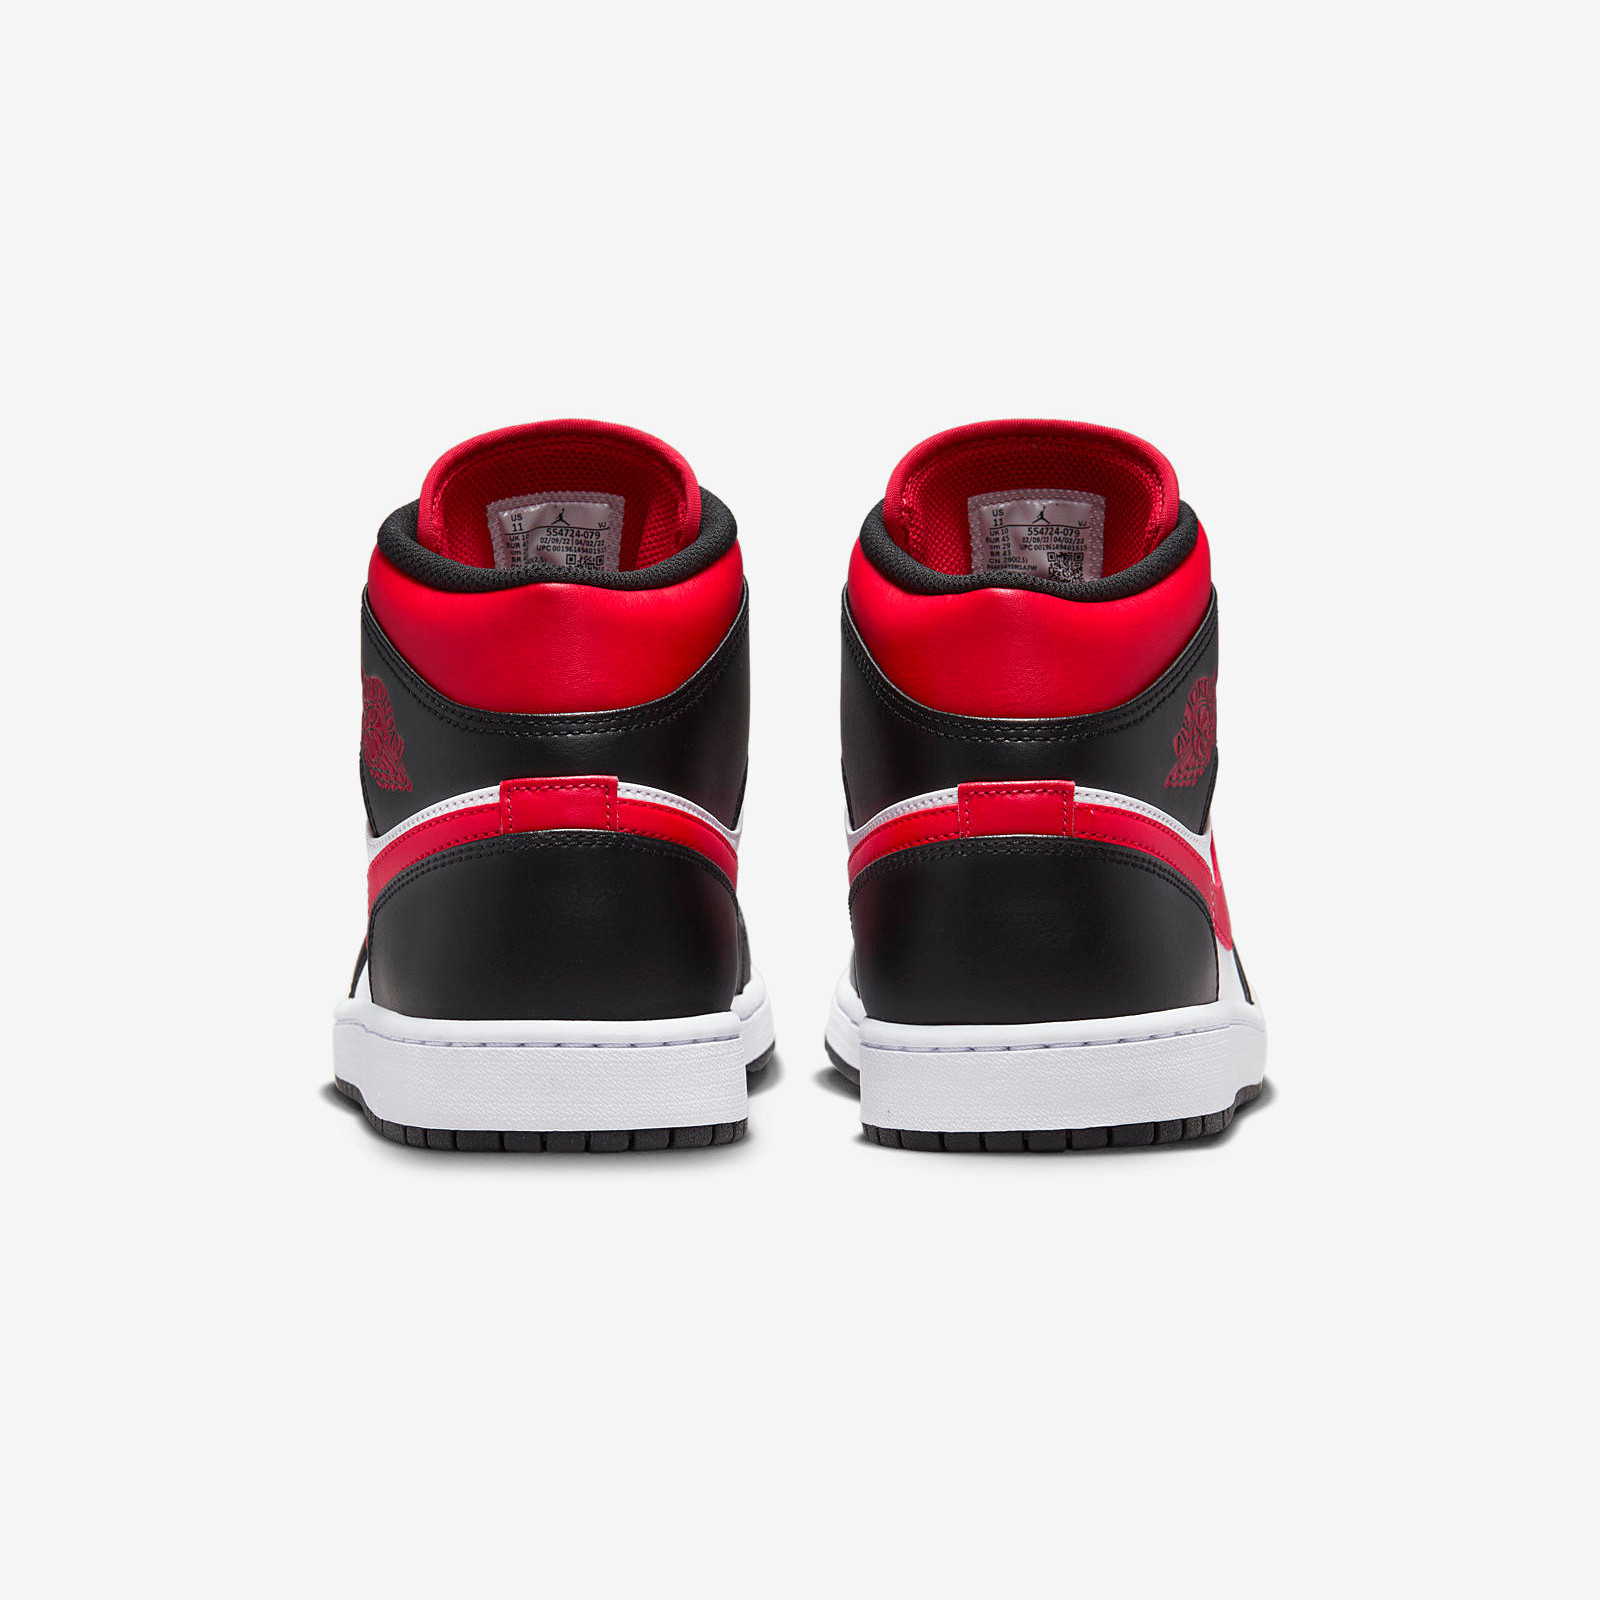 Air Jordan 1 Mid
Black / Fire Red